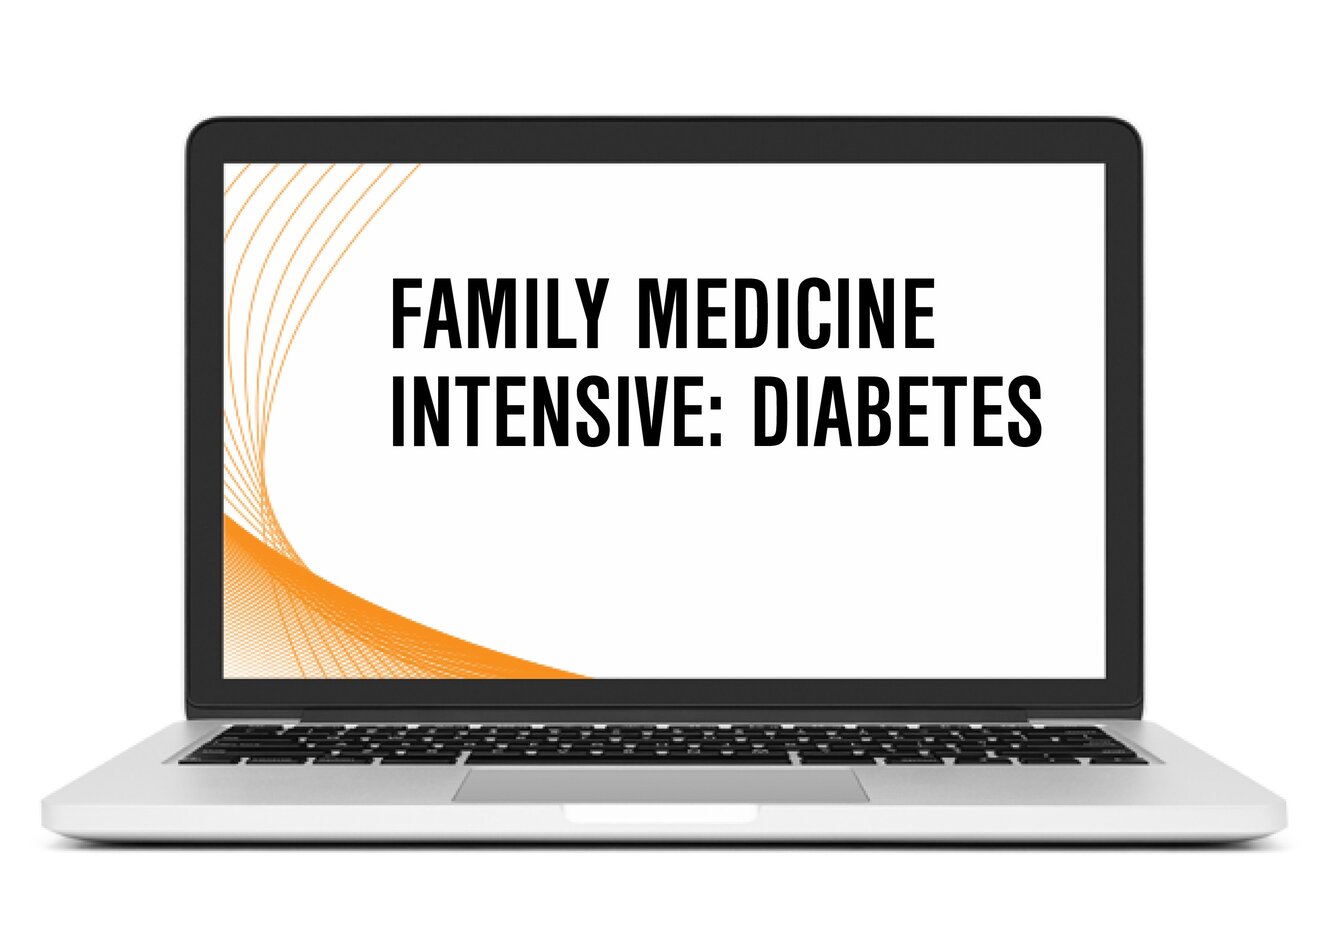 Family Medicine Intensive: Diabetes Title on Laptop